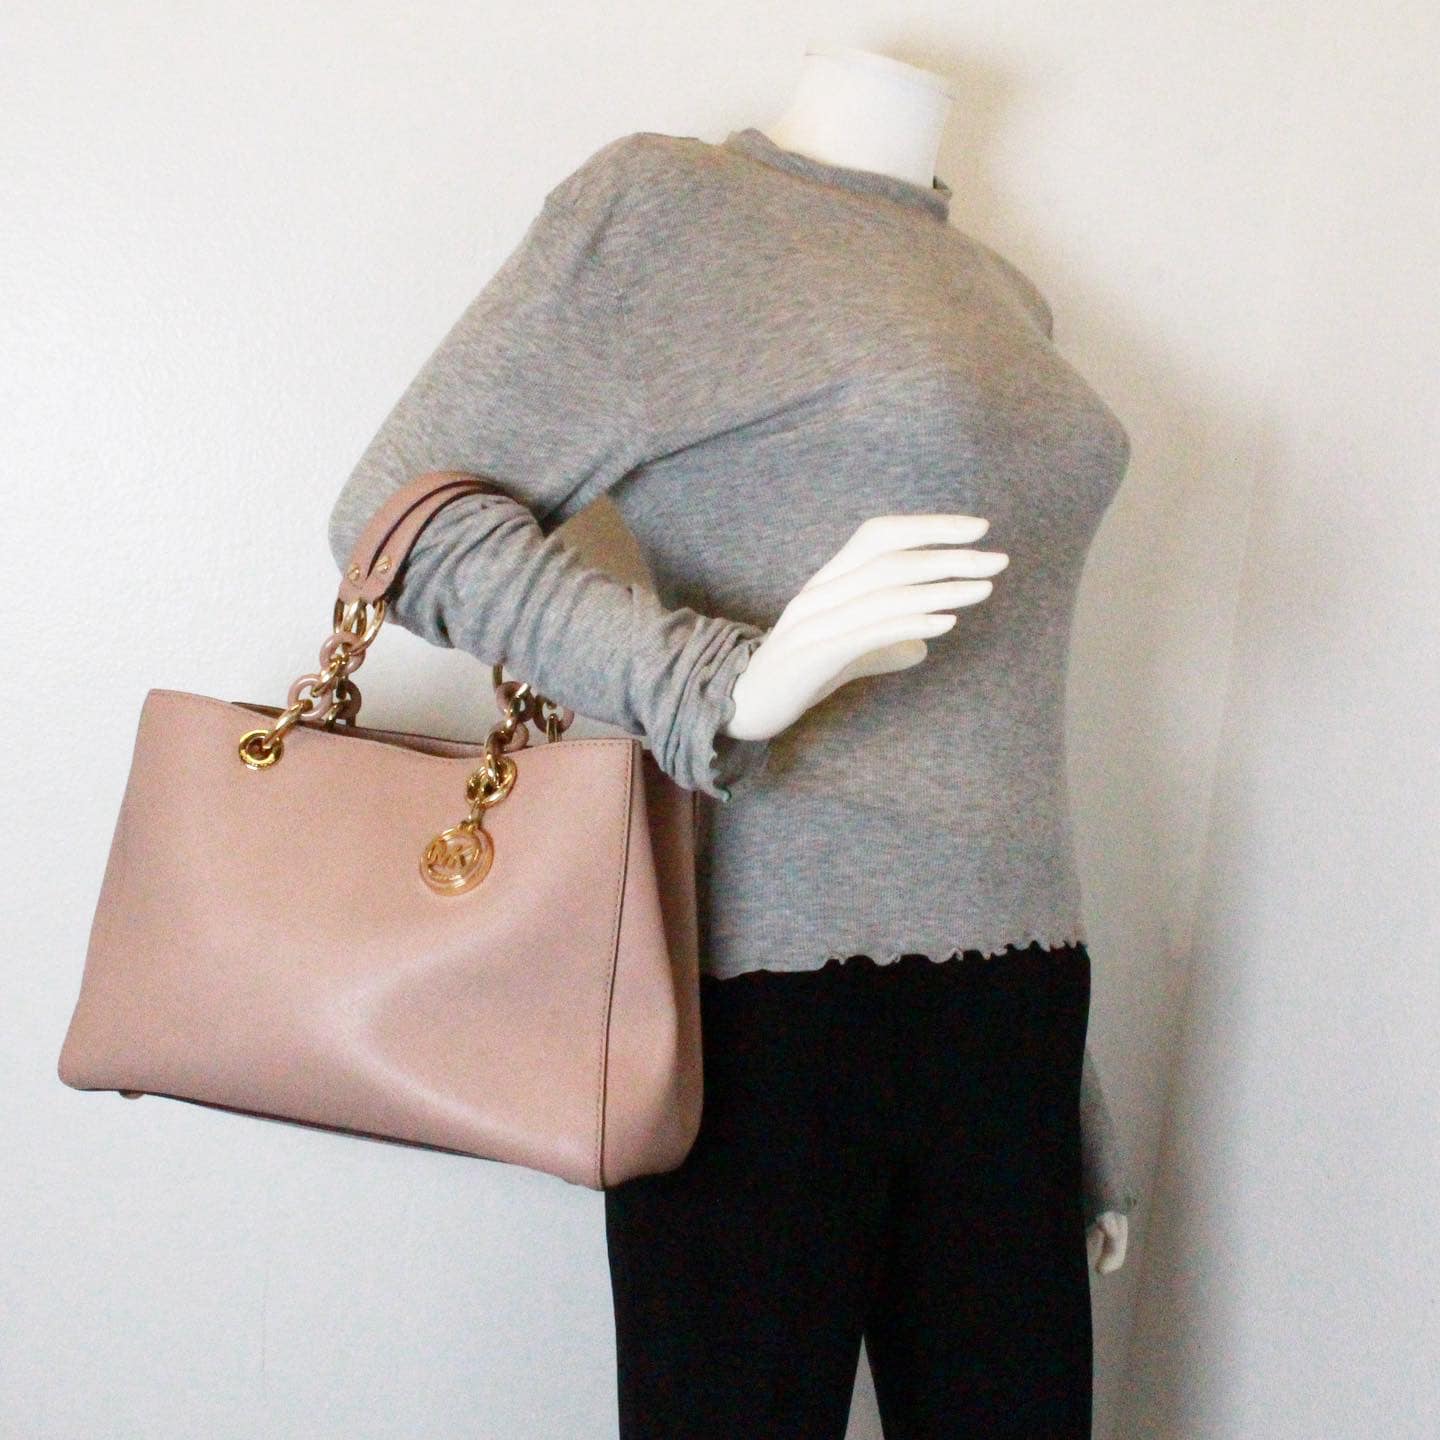 MICHAEL KORS #43025 Pink Rosewood Leather Handbag 8